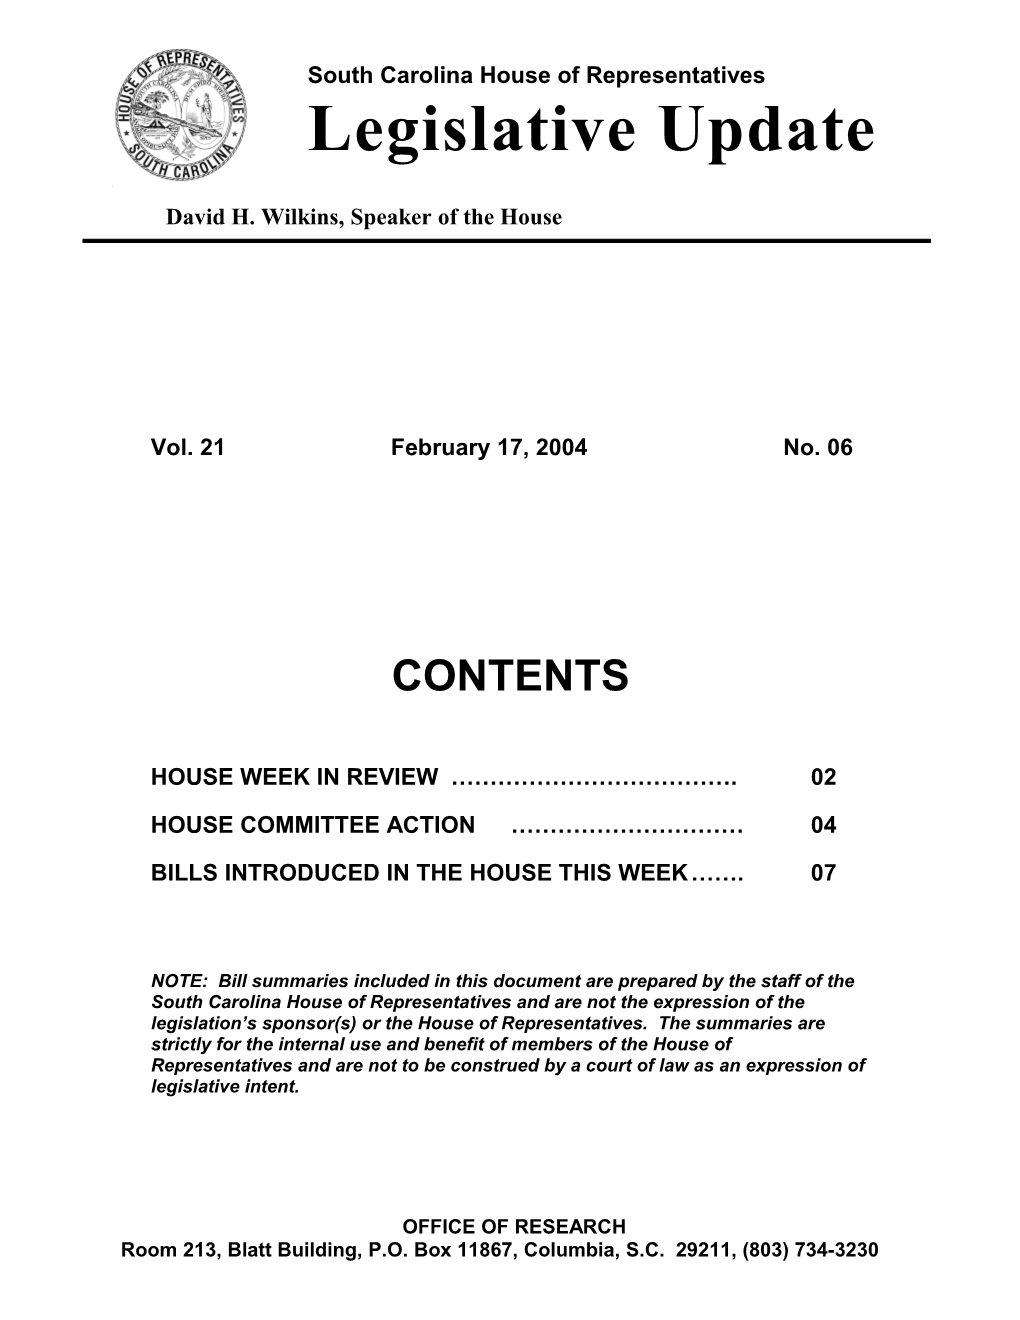 Legislative Update - Vol. 21 No. 06 February 17, 2004 - South Carolina Legislature Online